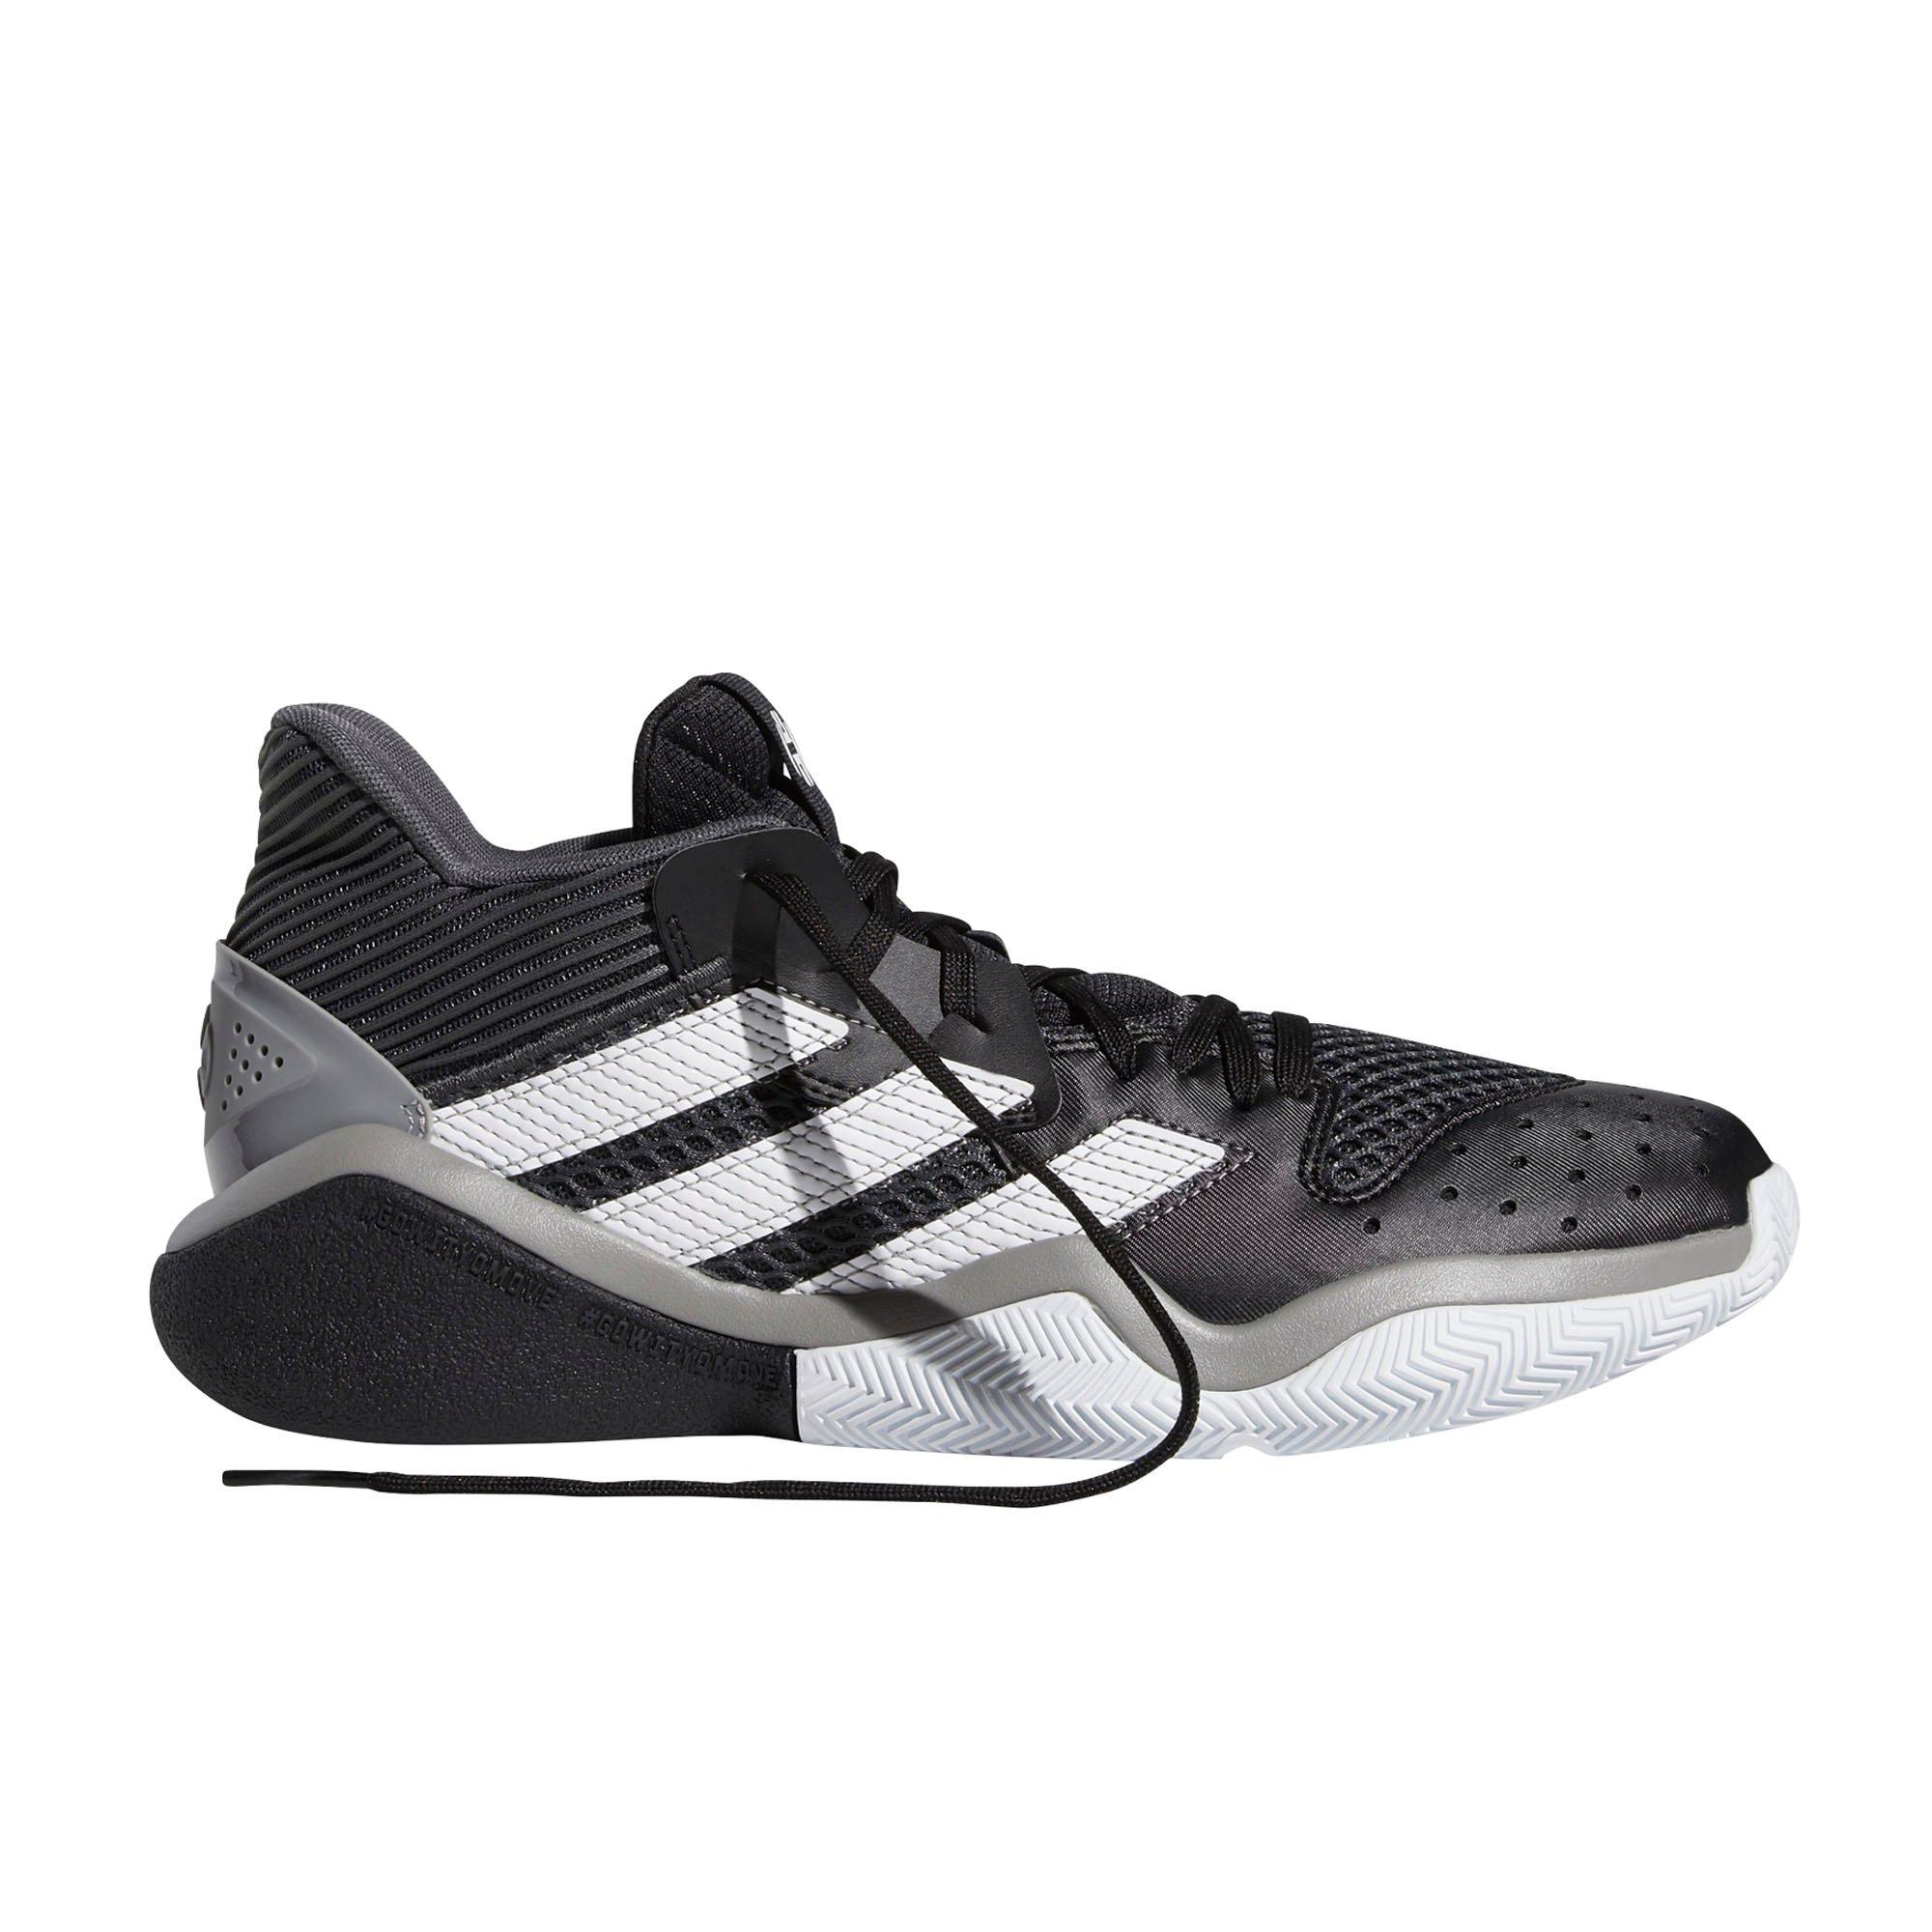 Hibbett Sports Mens Adidas Shoes Cheap Online